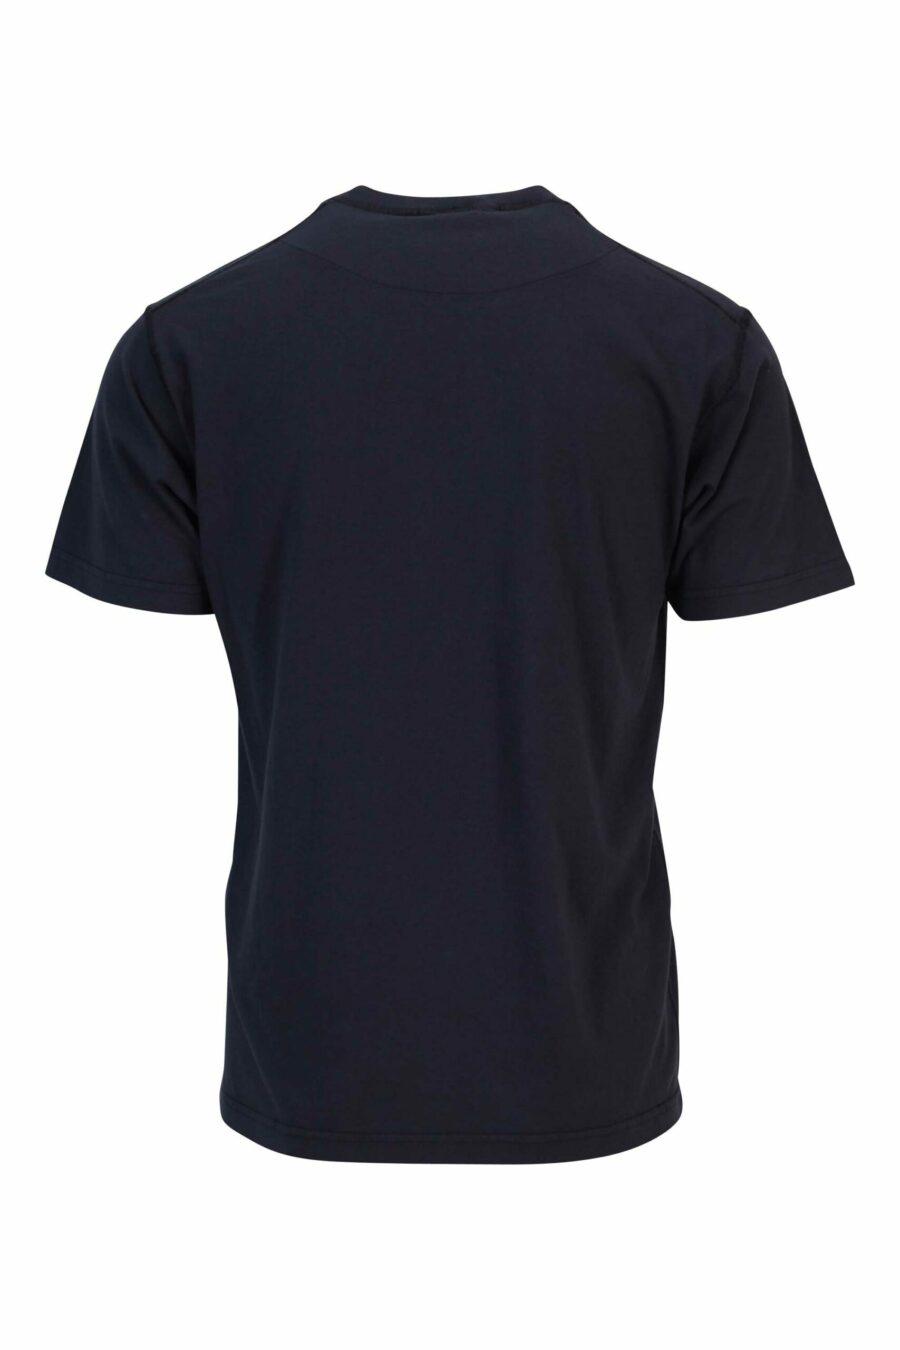 Dunkelblaues T-Shirt mit Mini-Logokompass - 8052572905155 1 skaliert